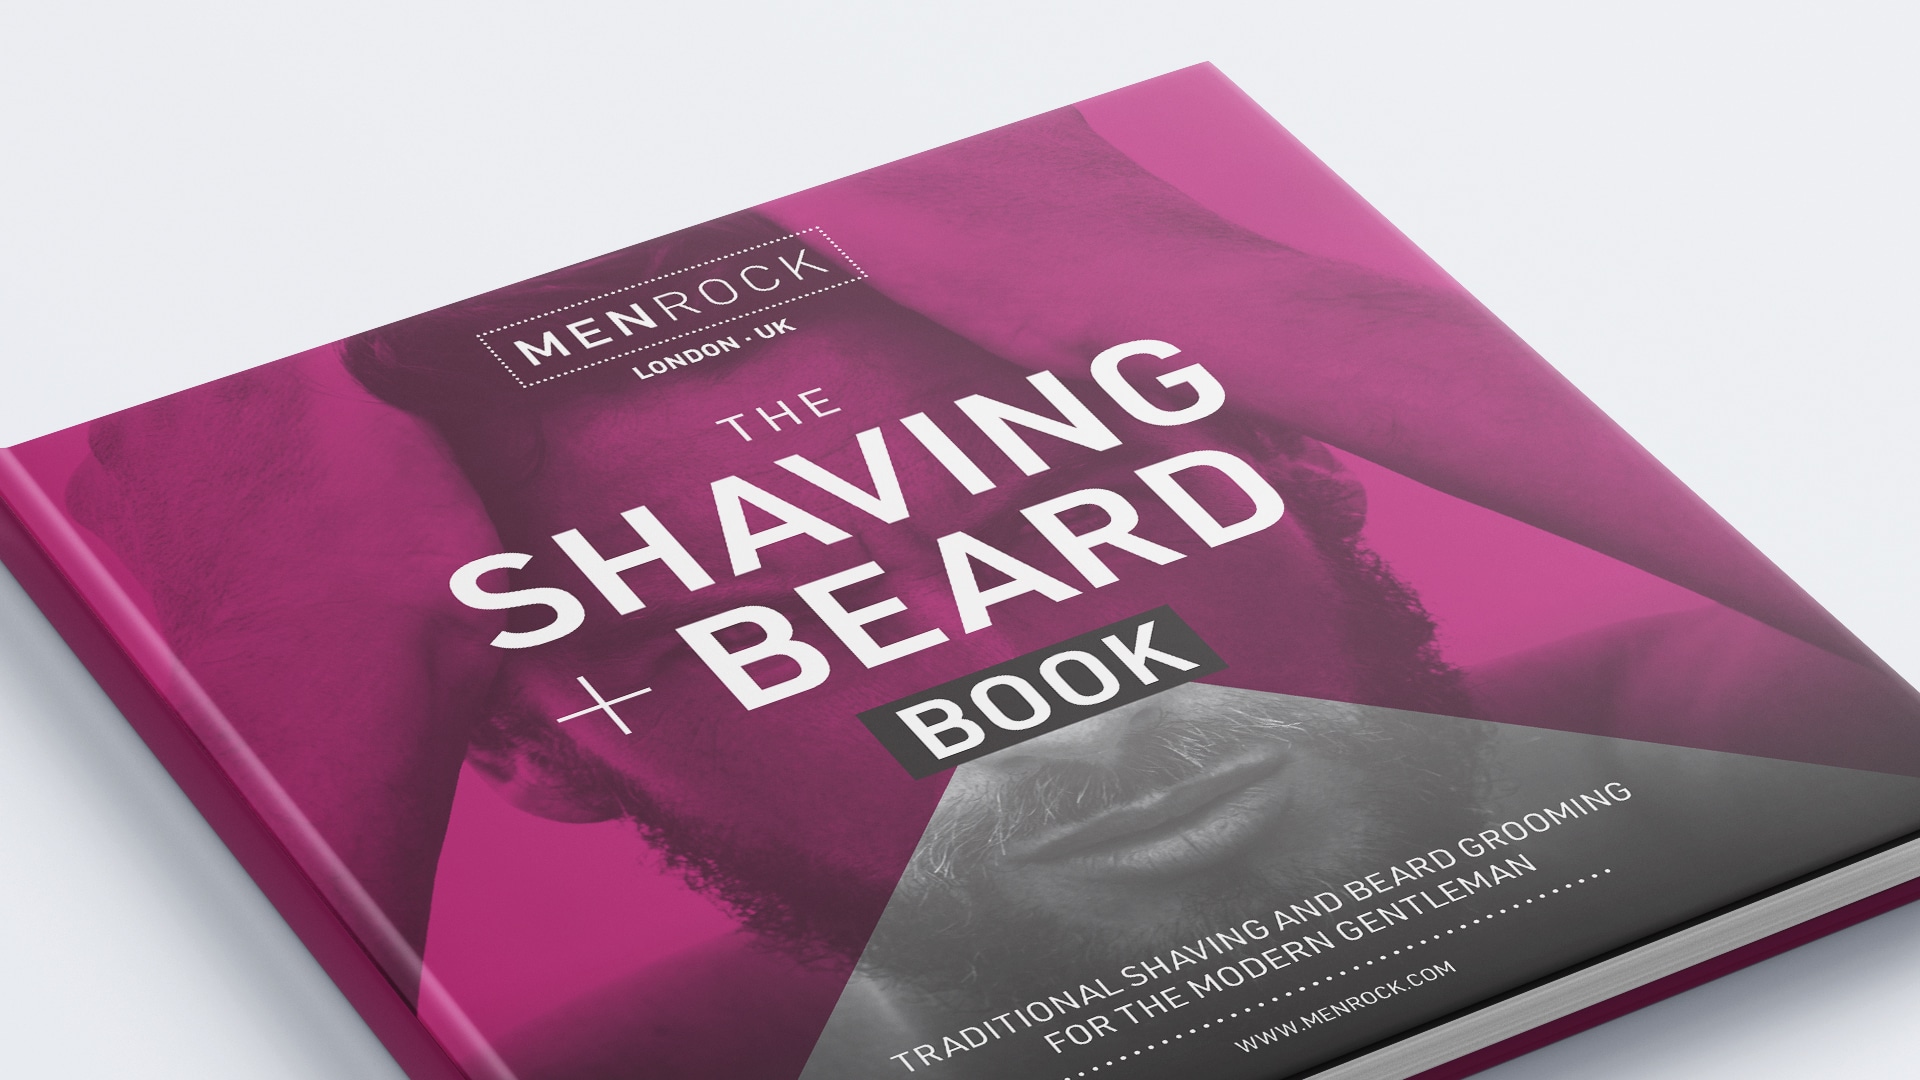 Men Rock Beard Book